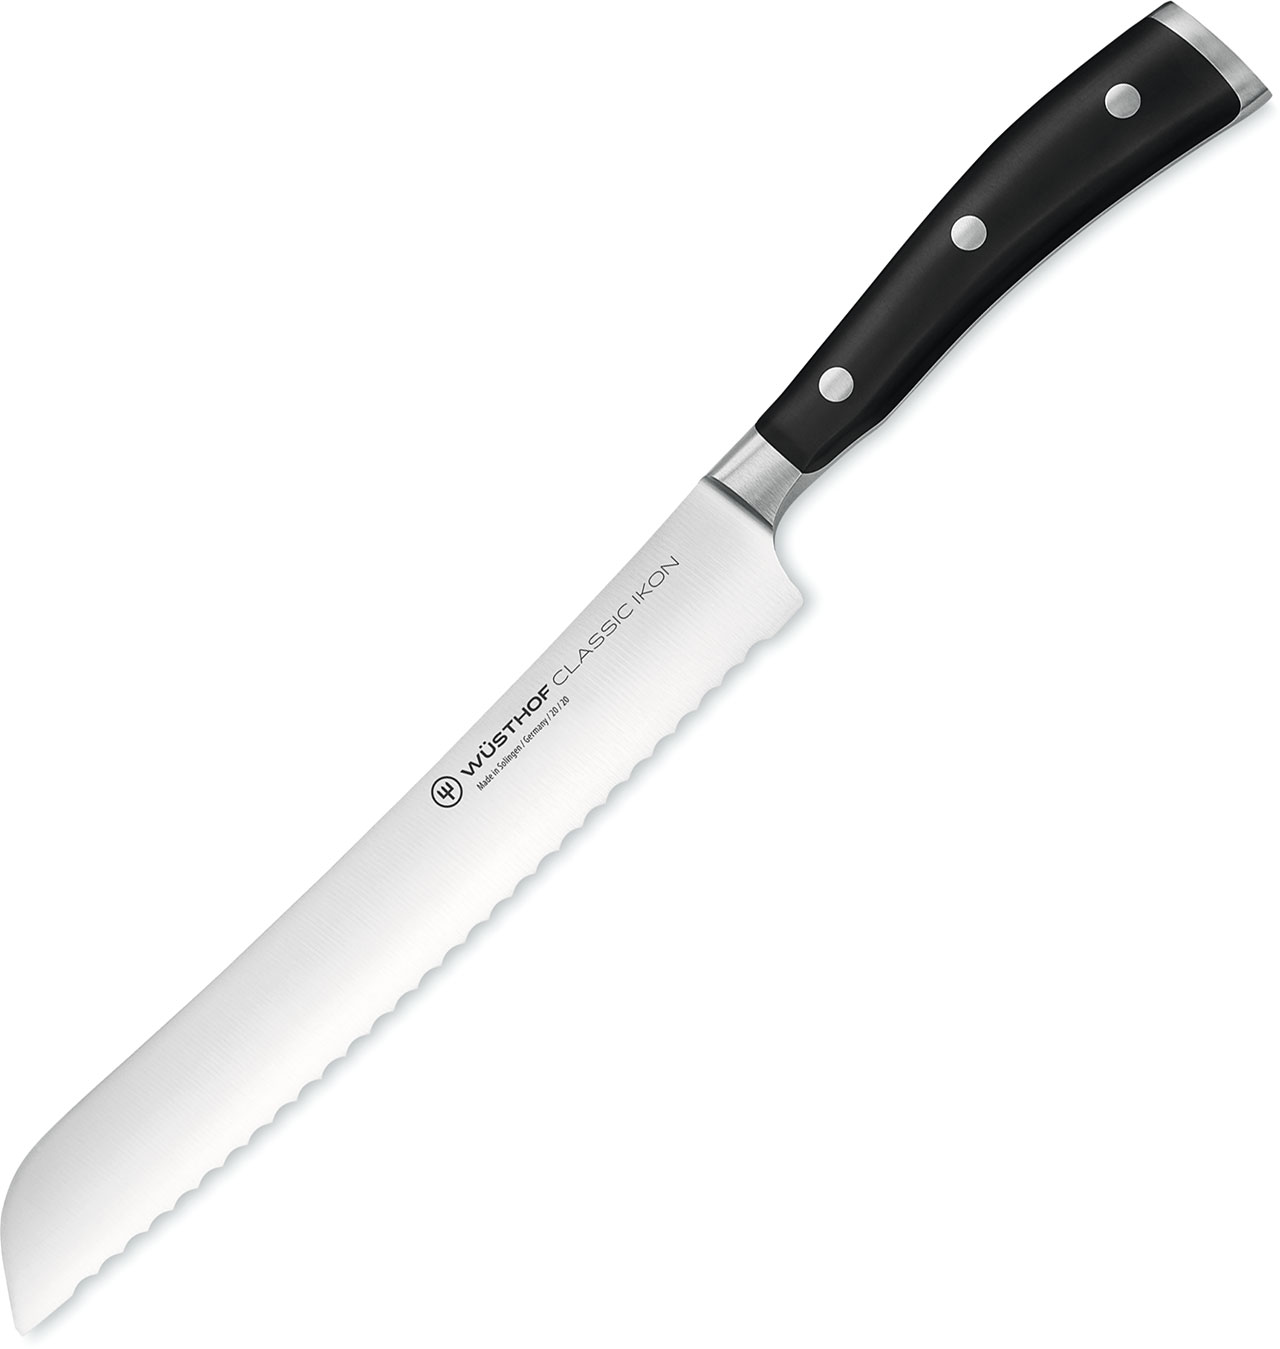 Wüsthof Classic Ikon Bread Knife 20cm